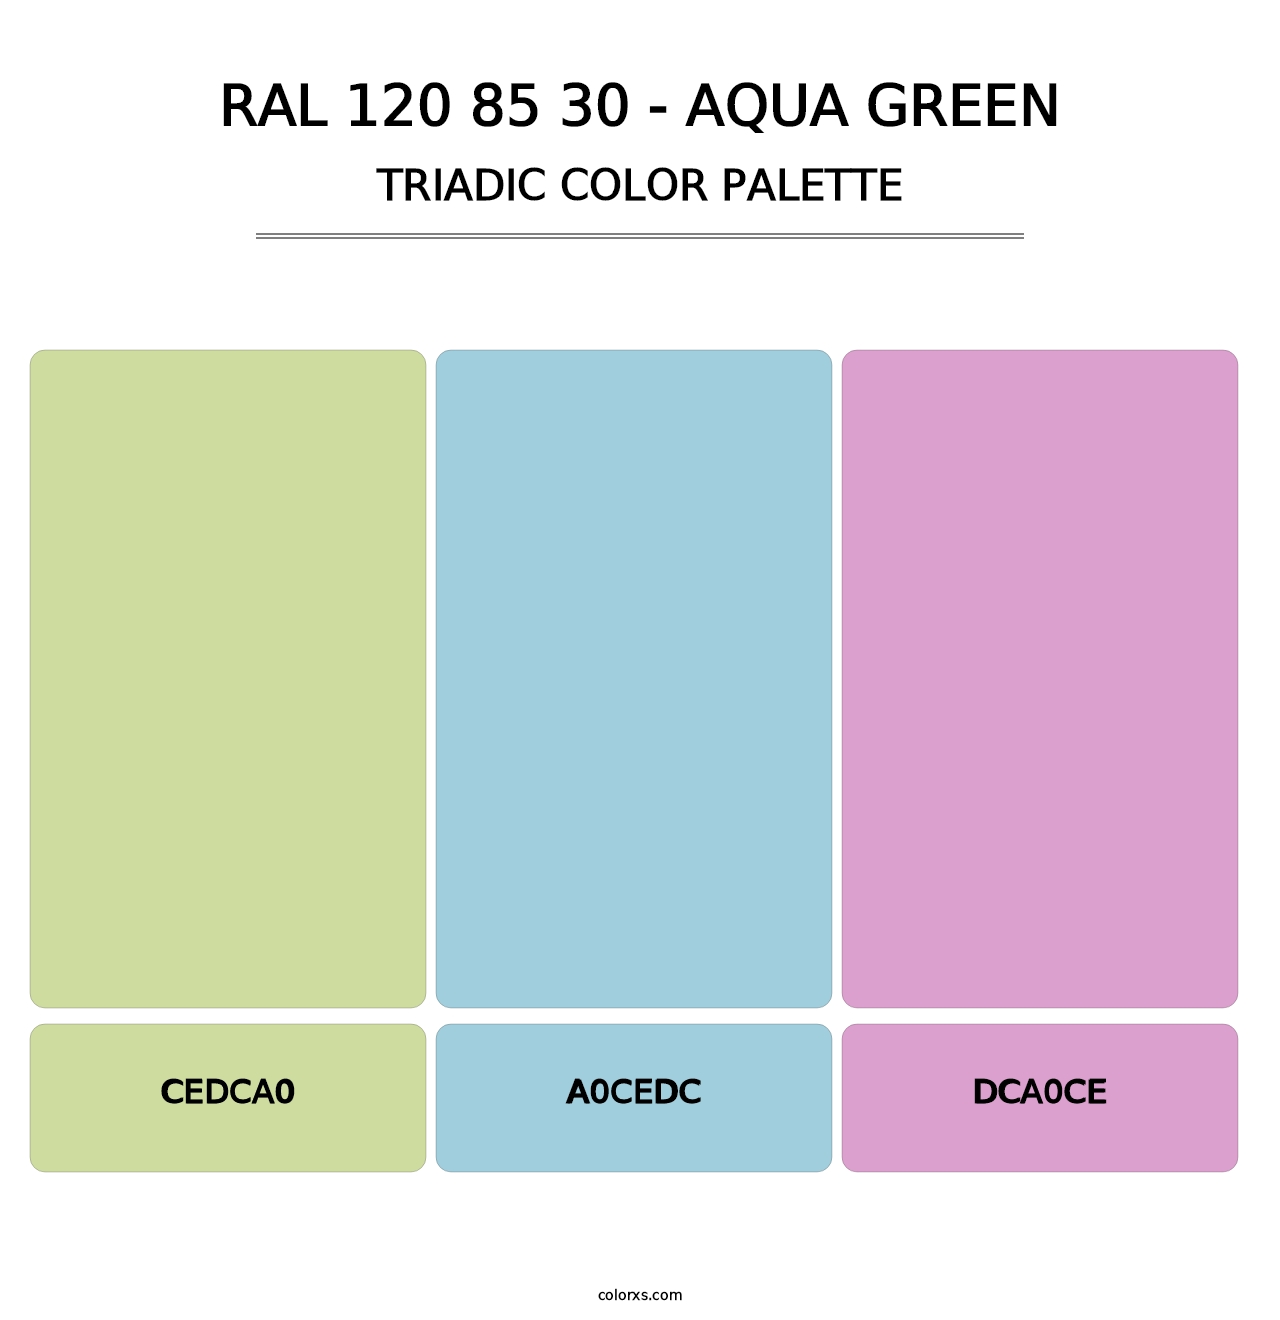 RAL 120 85 30 - Aqua Green - Triadic Color Palette